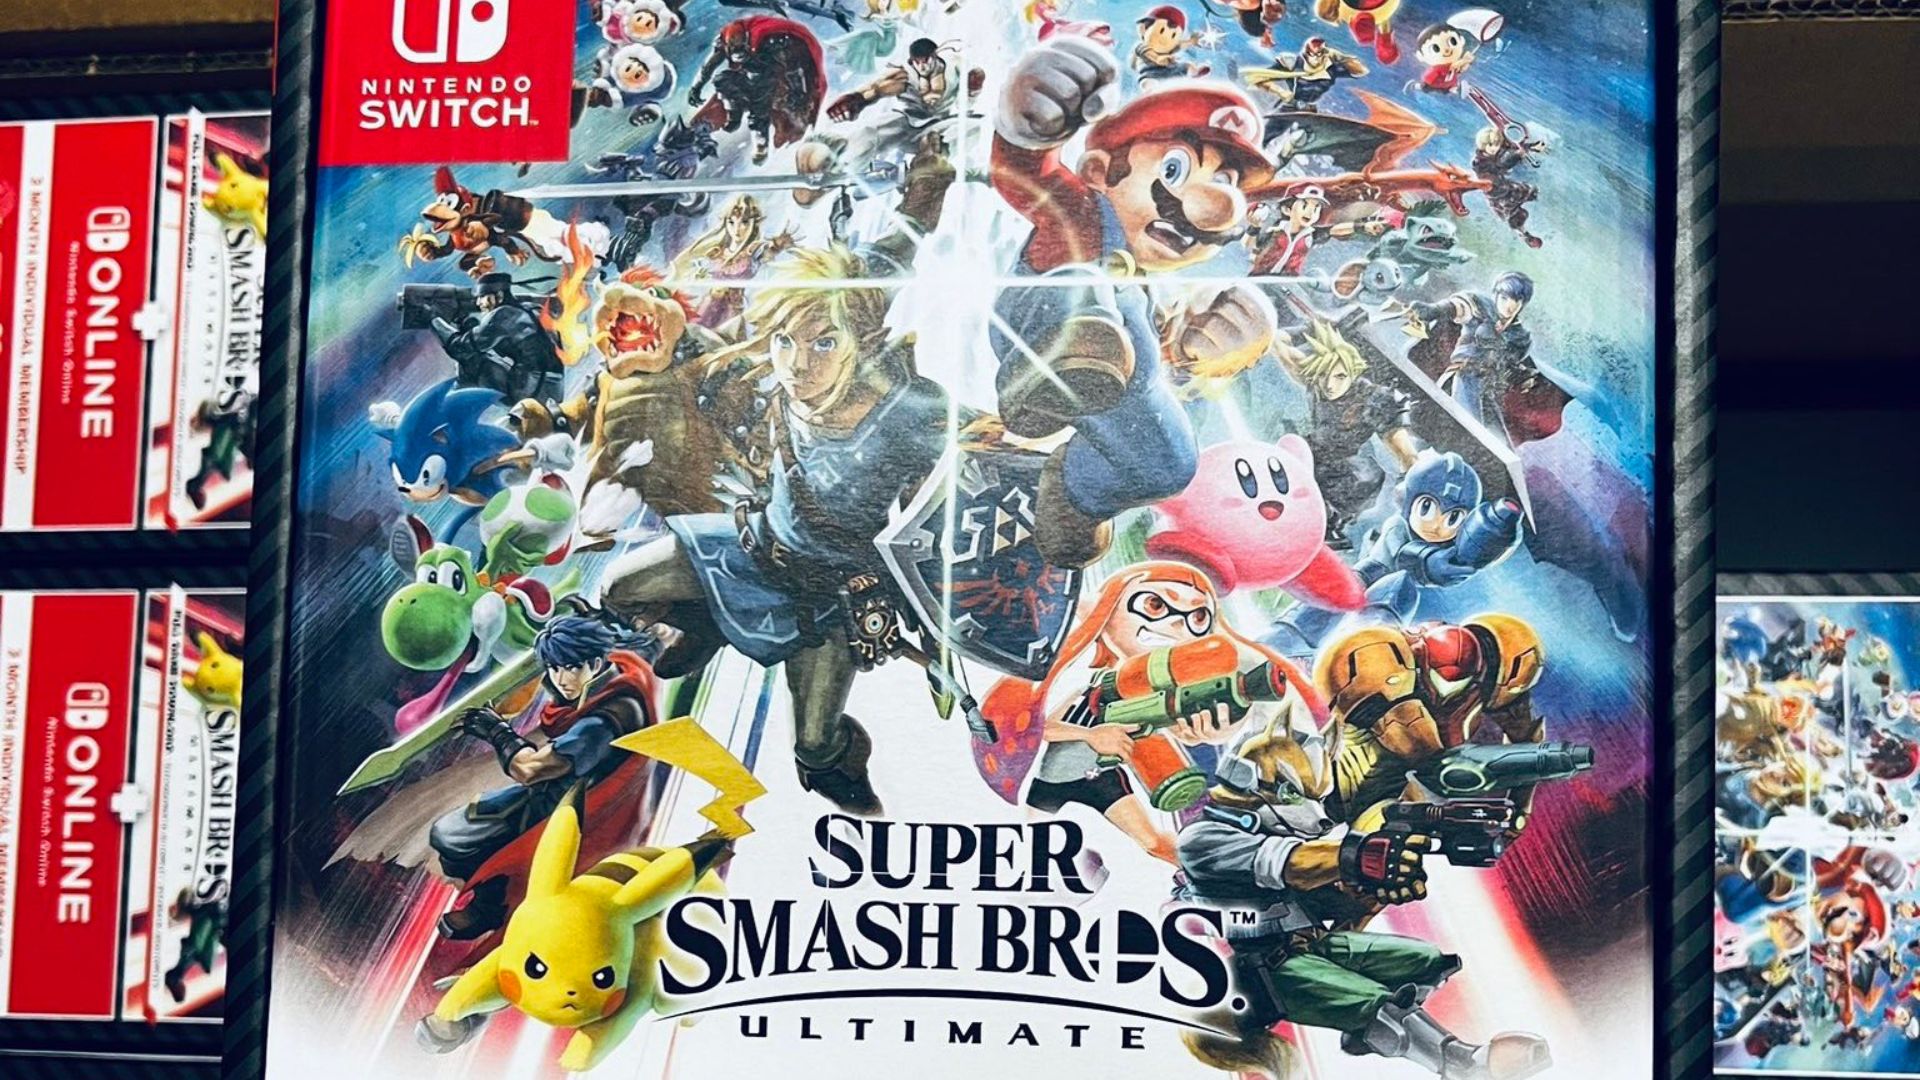 Super Smash Bros Ultimate - Nintendo Switch